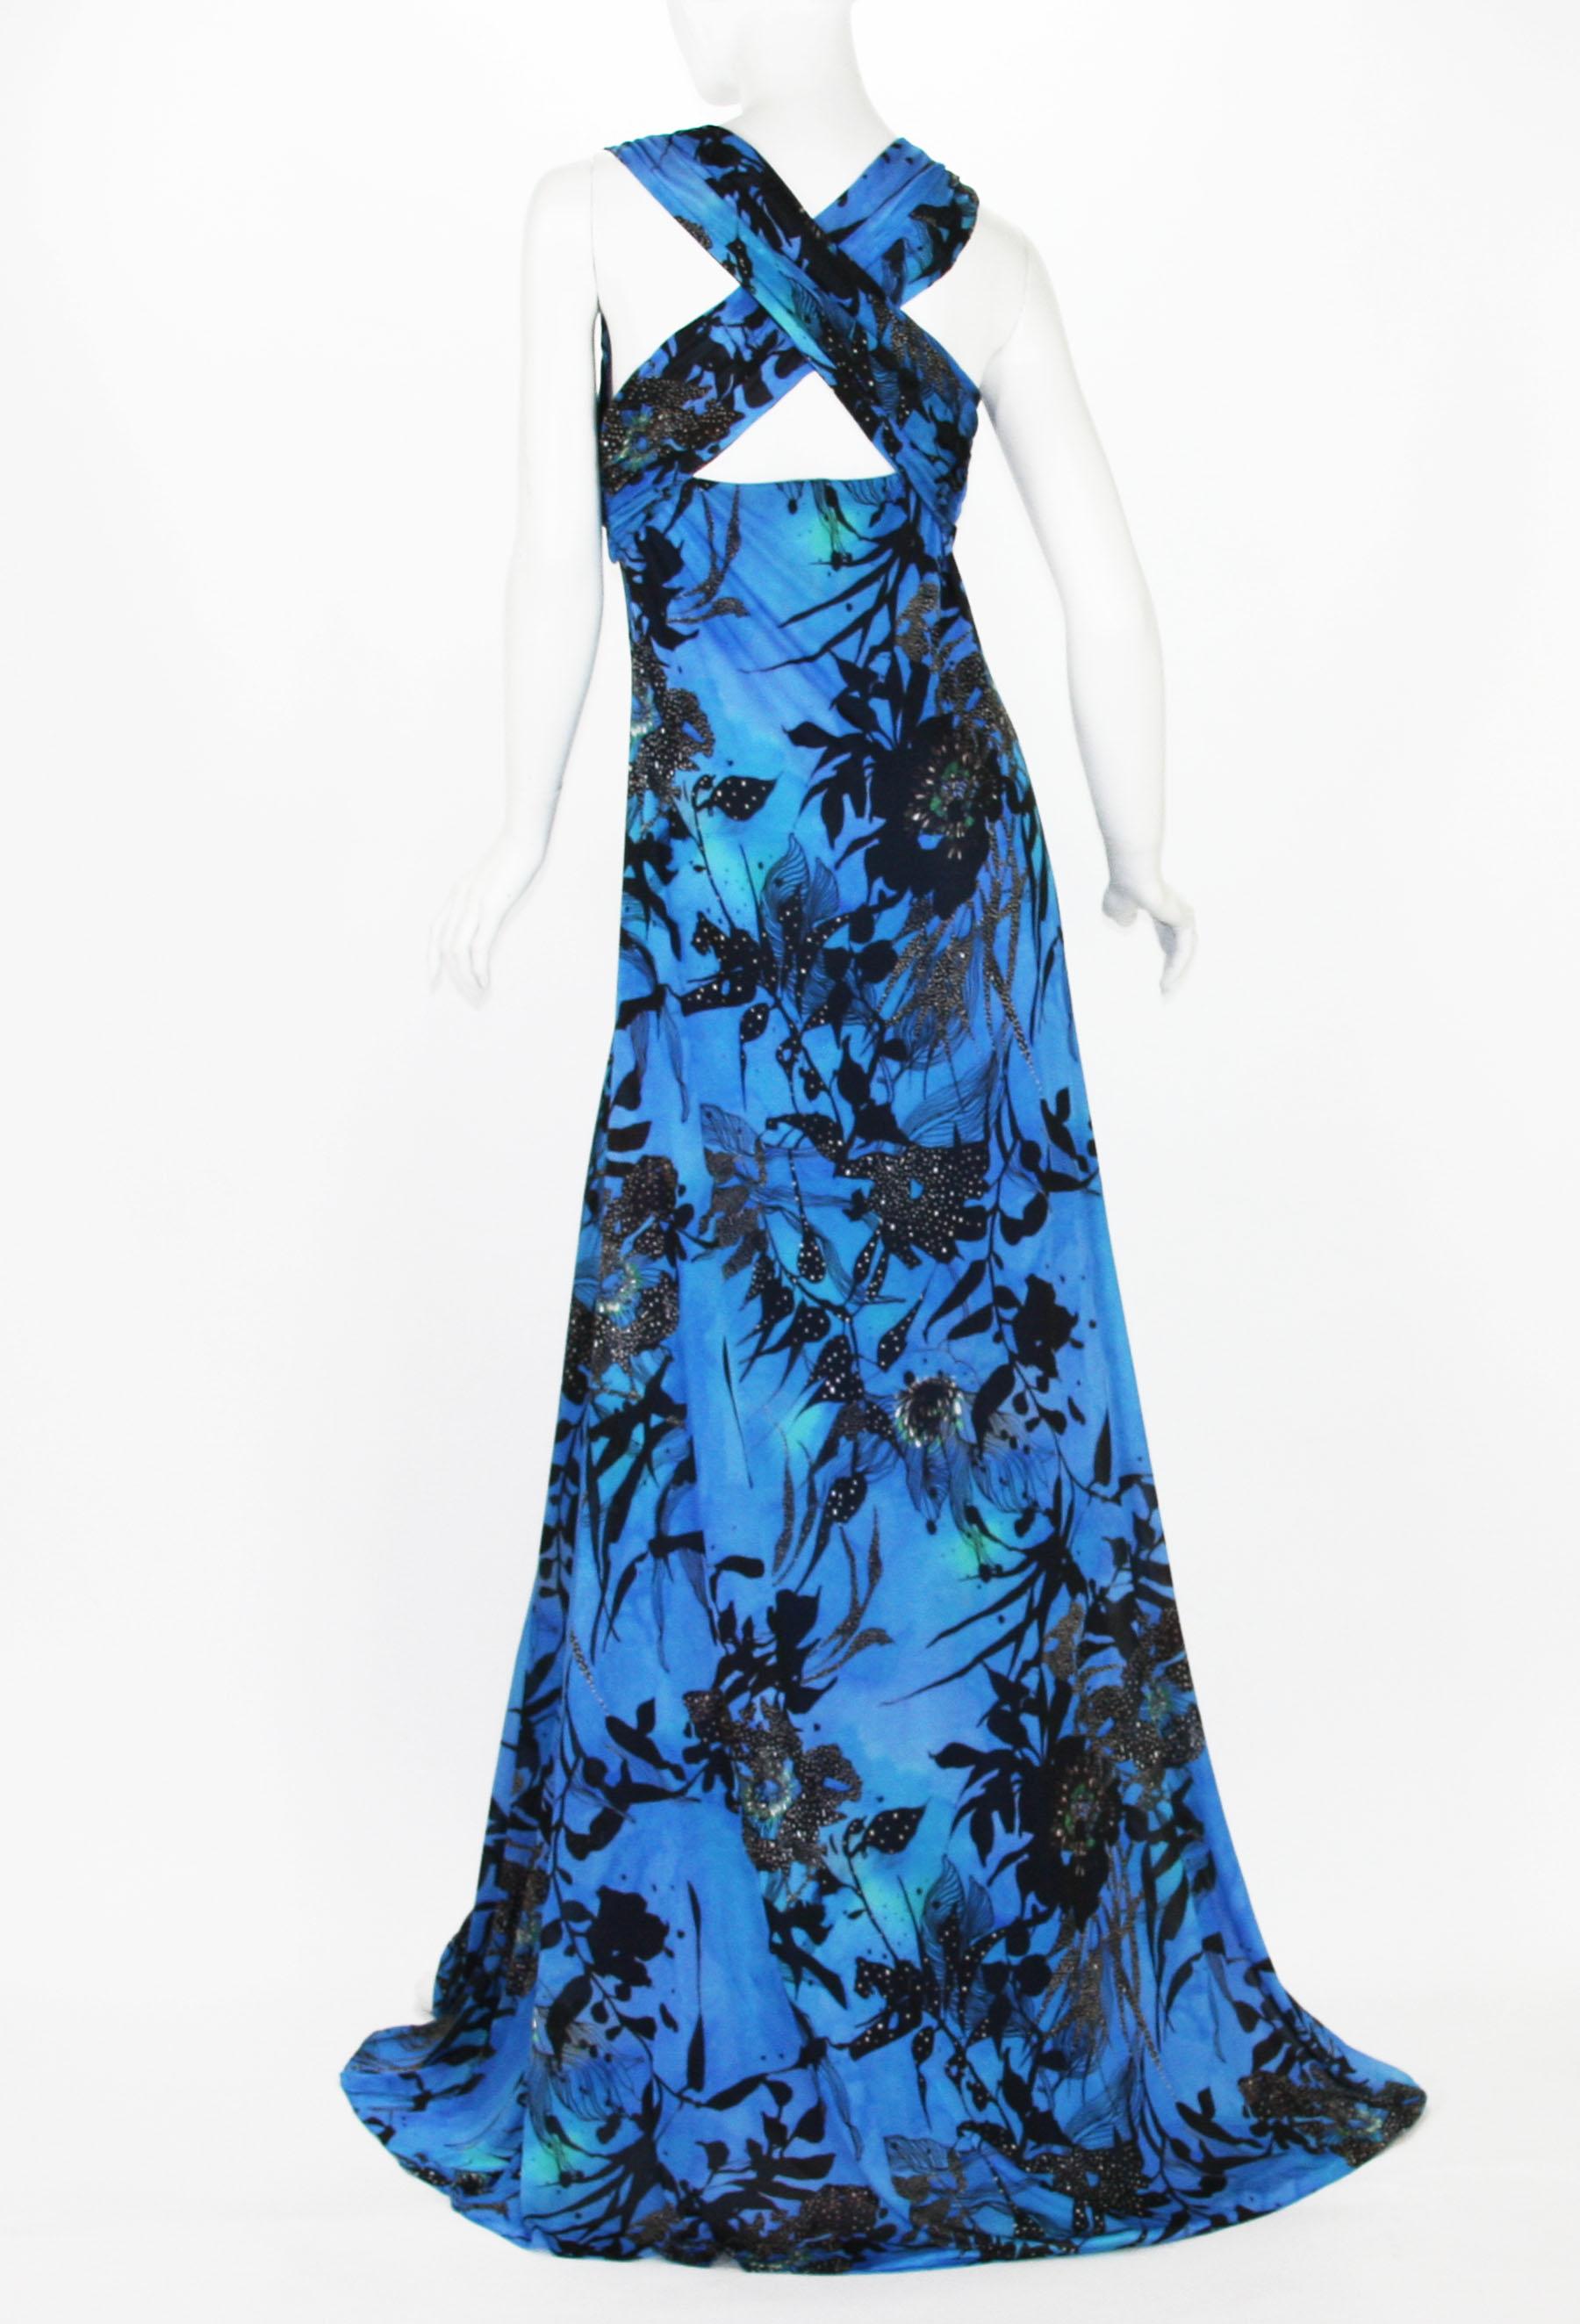 blue and black floral dress